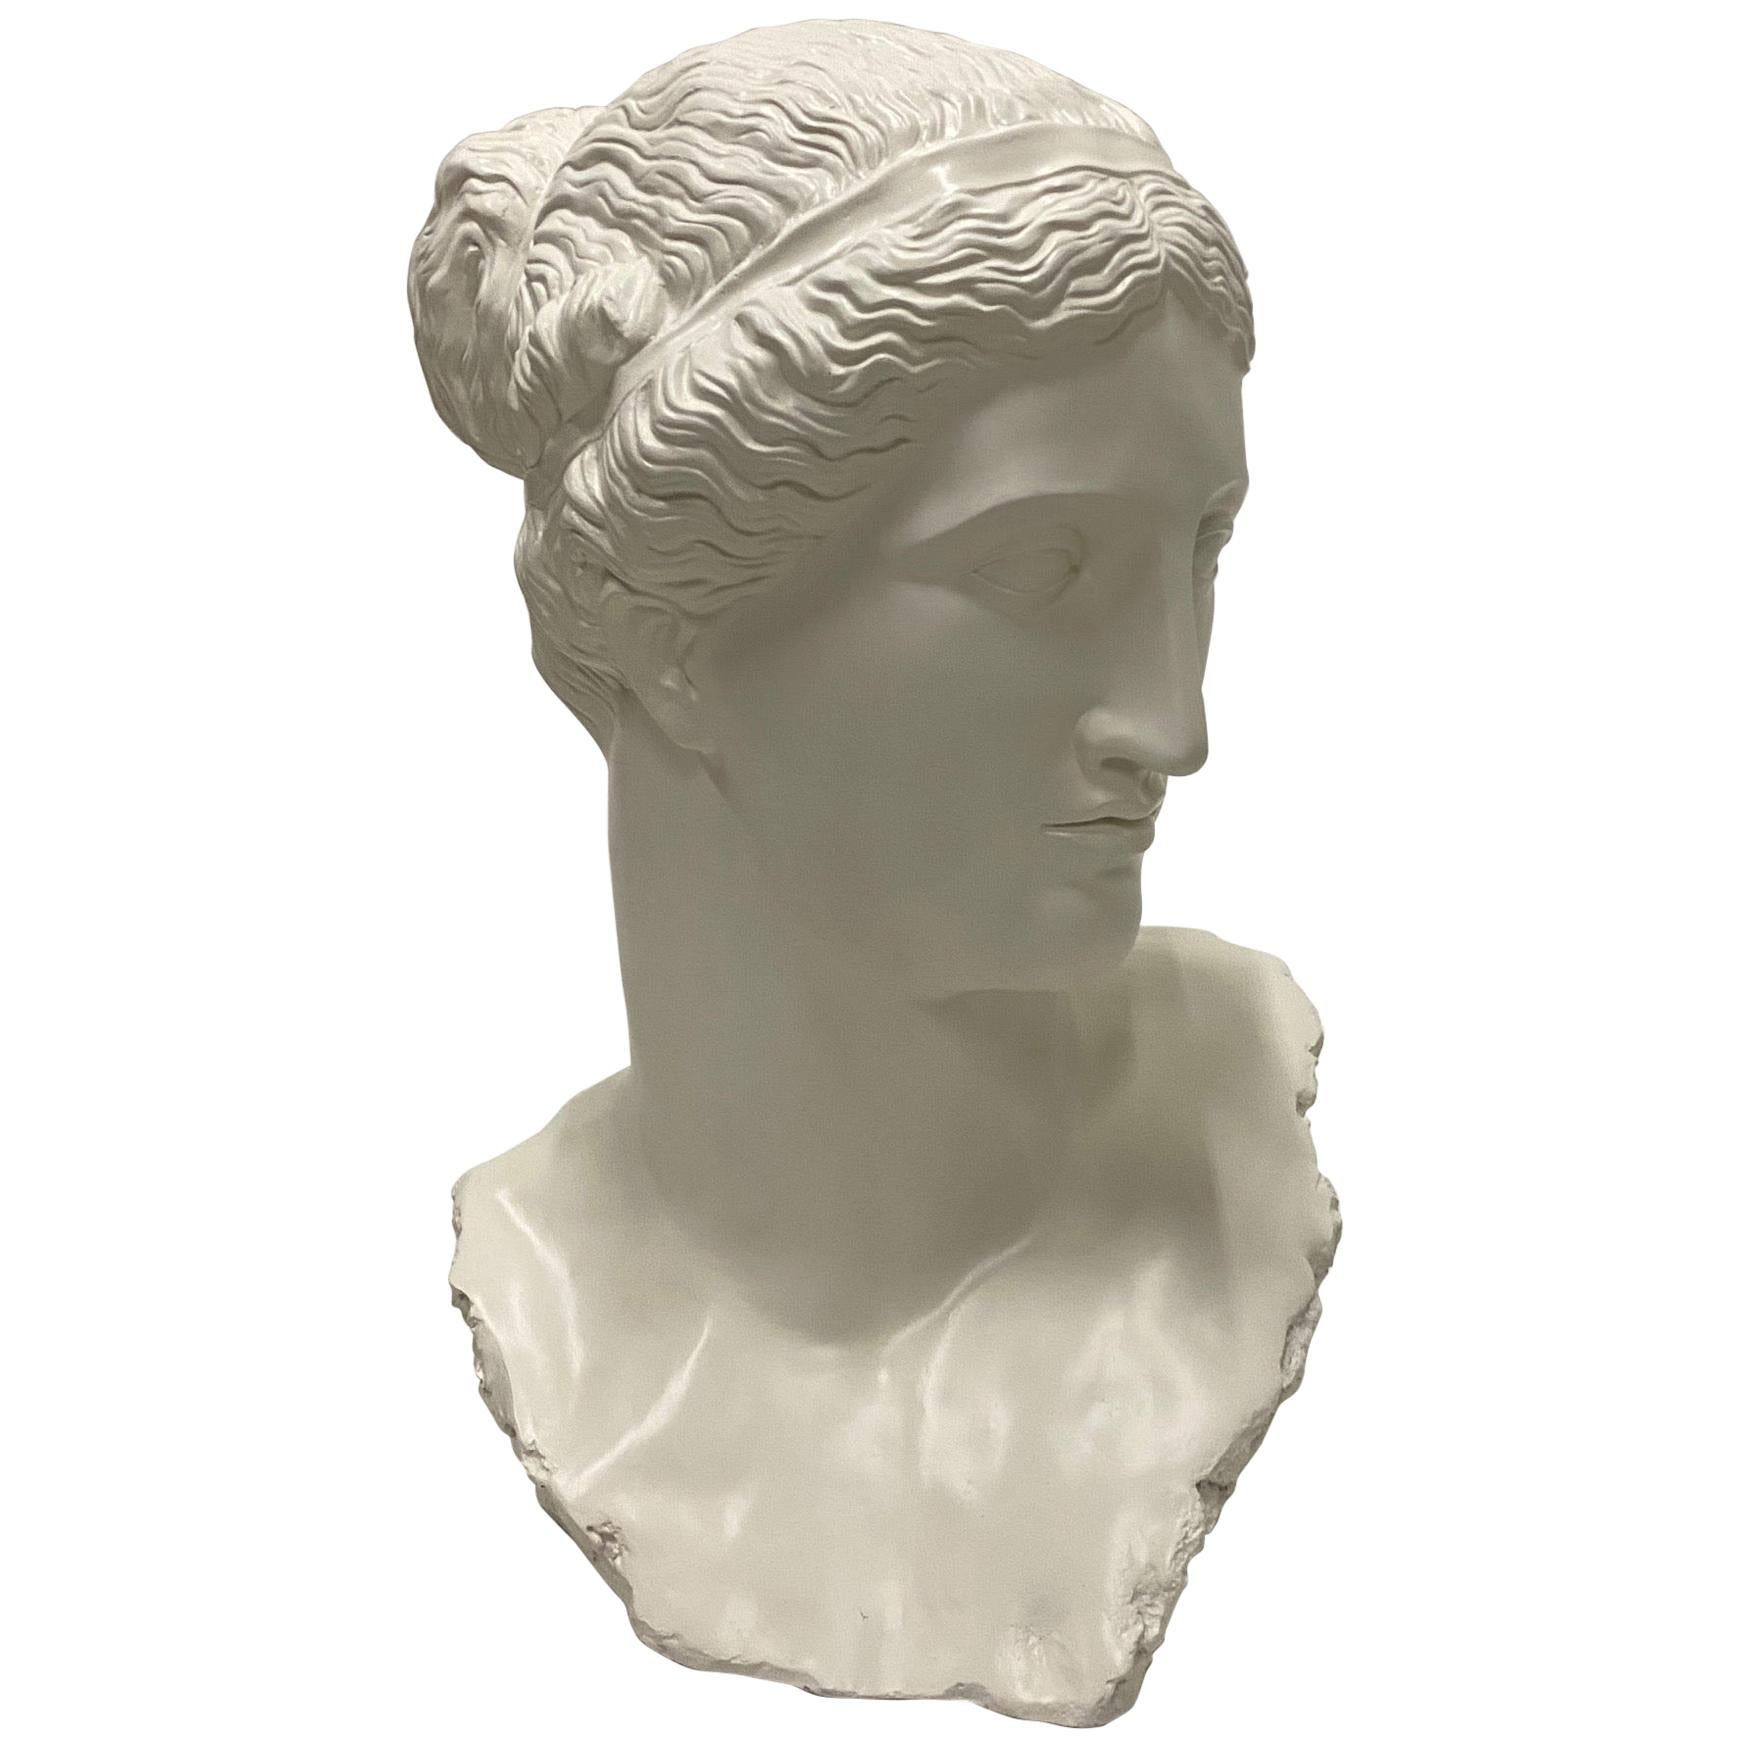 Impressive Large and Romantic Fiberglass Bust of Diana